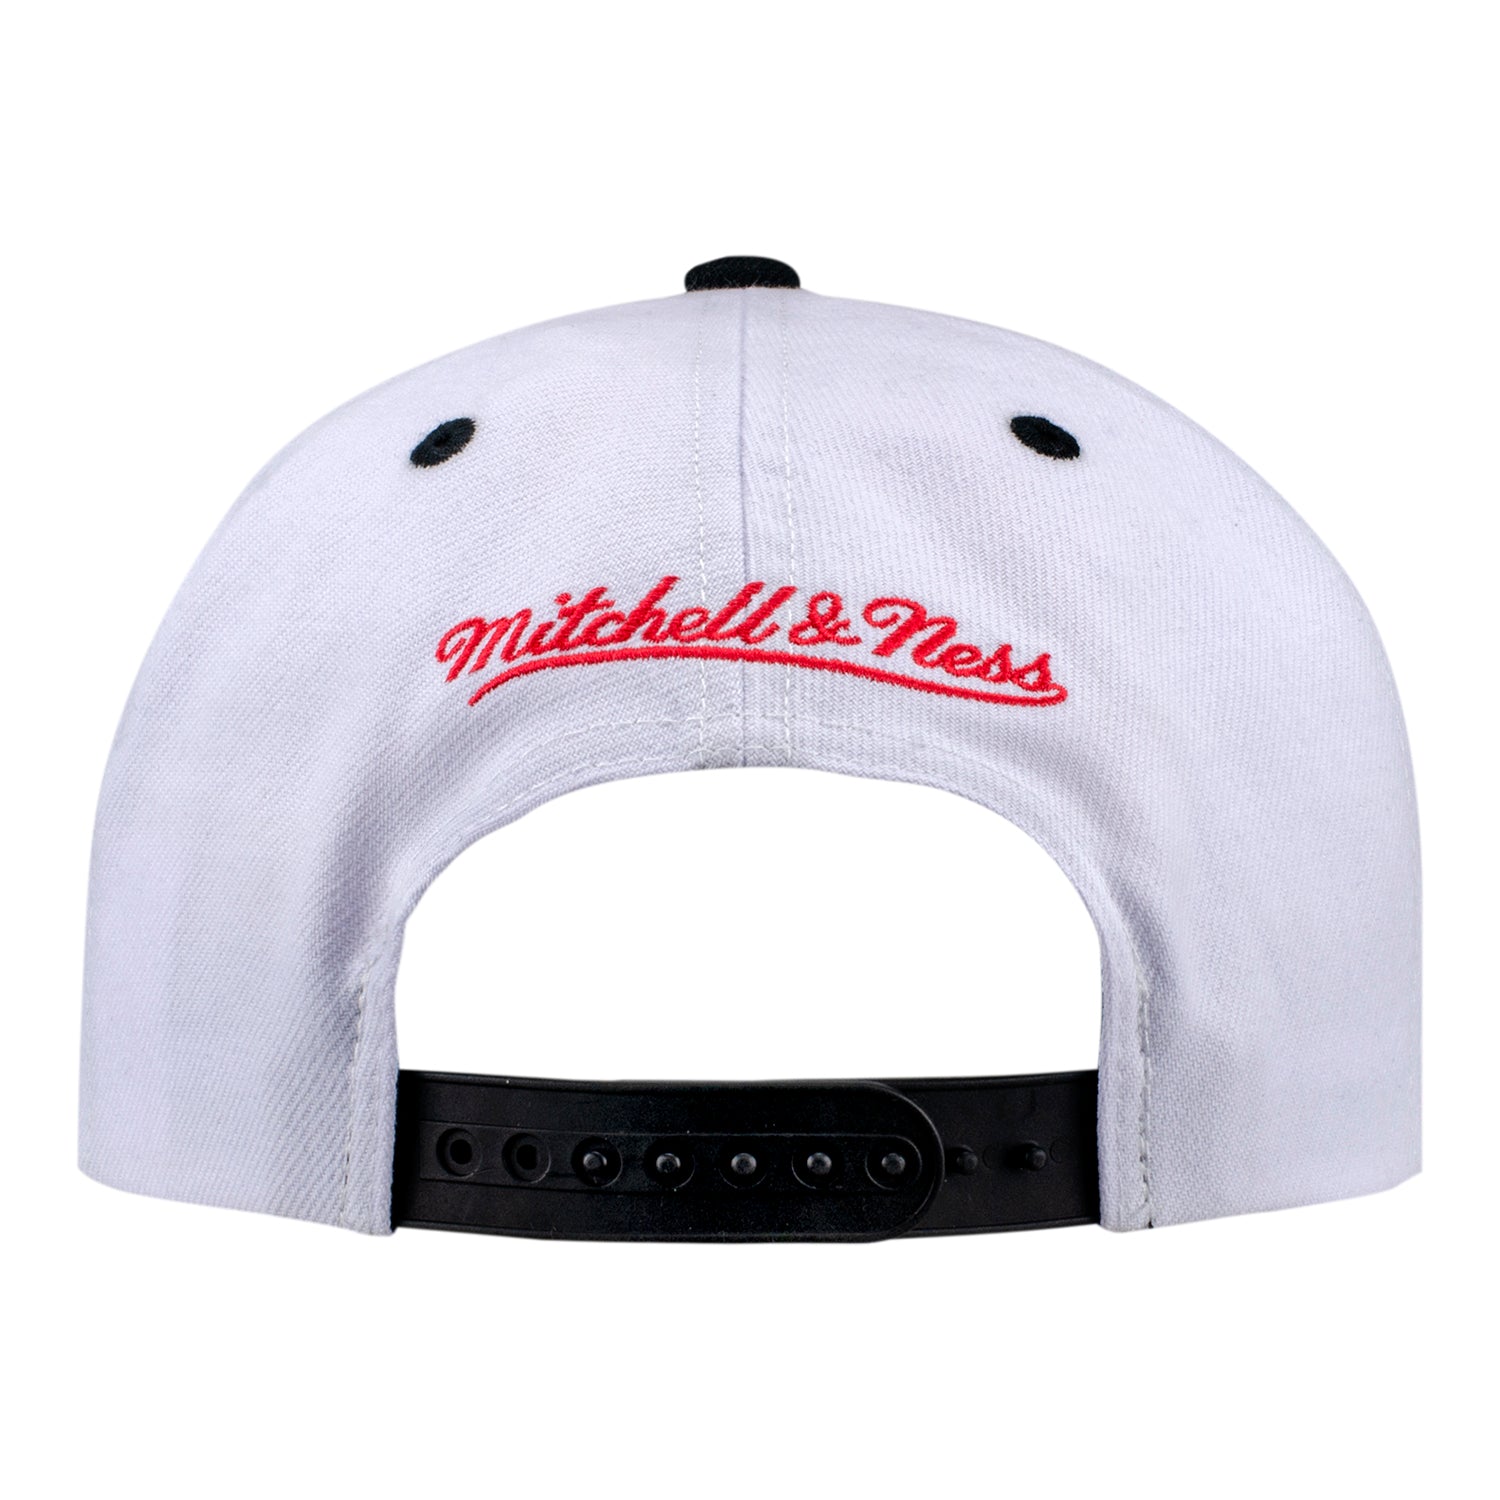 Mitchell & Ness, Accessories, Mitchell Ness Okc Thunder Hat